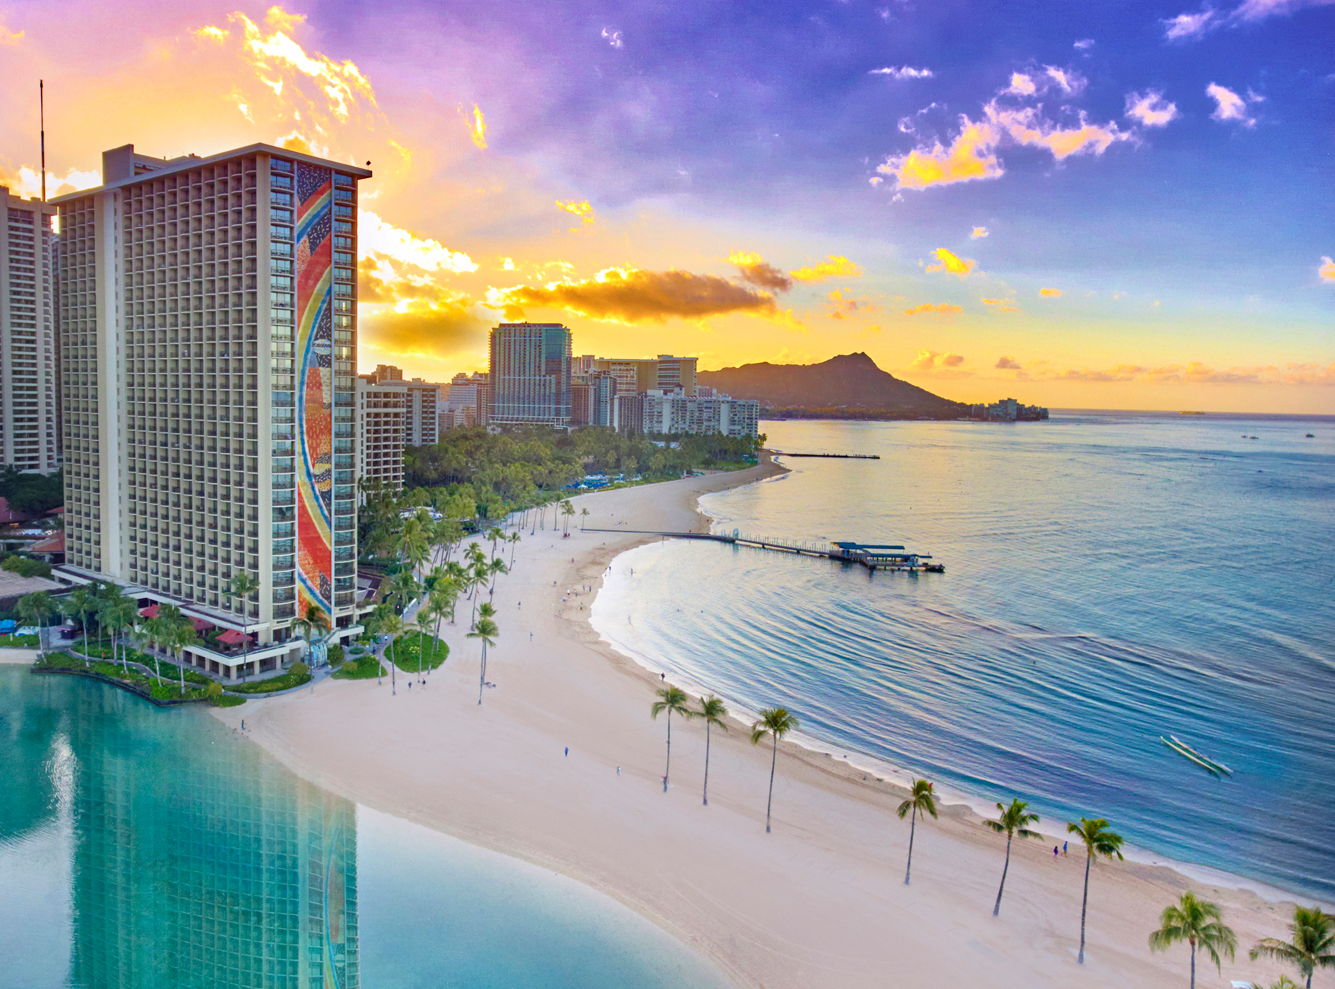 Hilton Hawaiian Village® Waikiki Beach Resort Tapa Pool Cabanas - Waikiki  Beach Activities - We deliver the experience